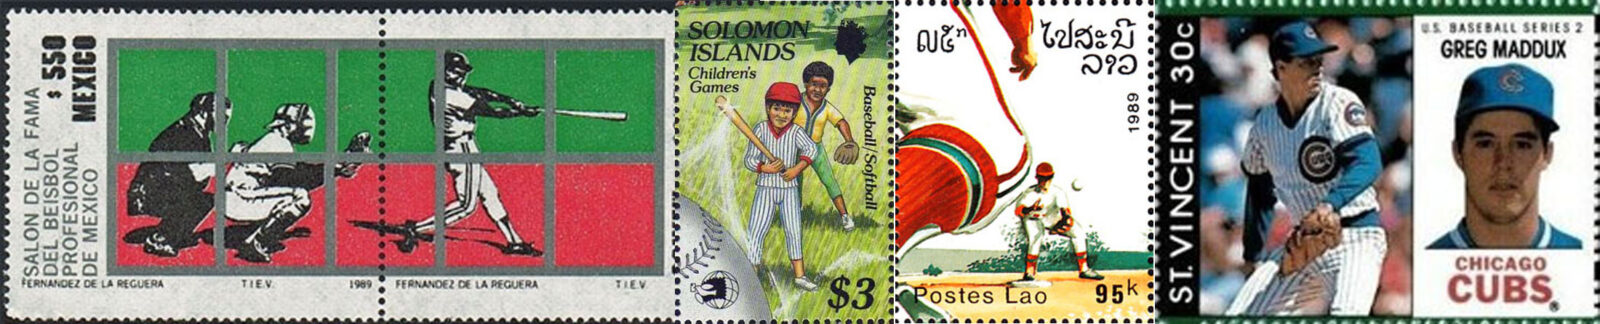 International Baseball Postage Stamps (1985 to 1989)